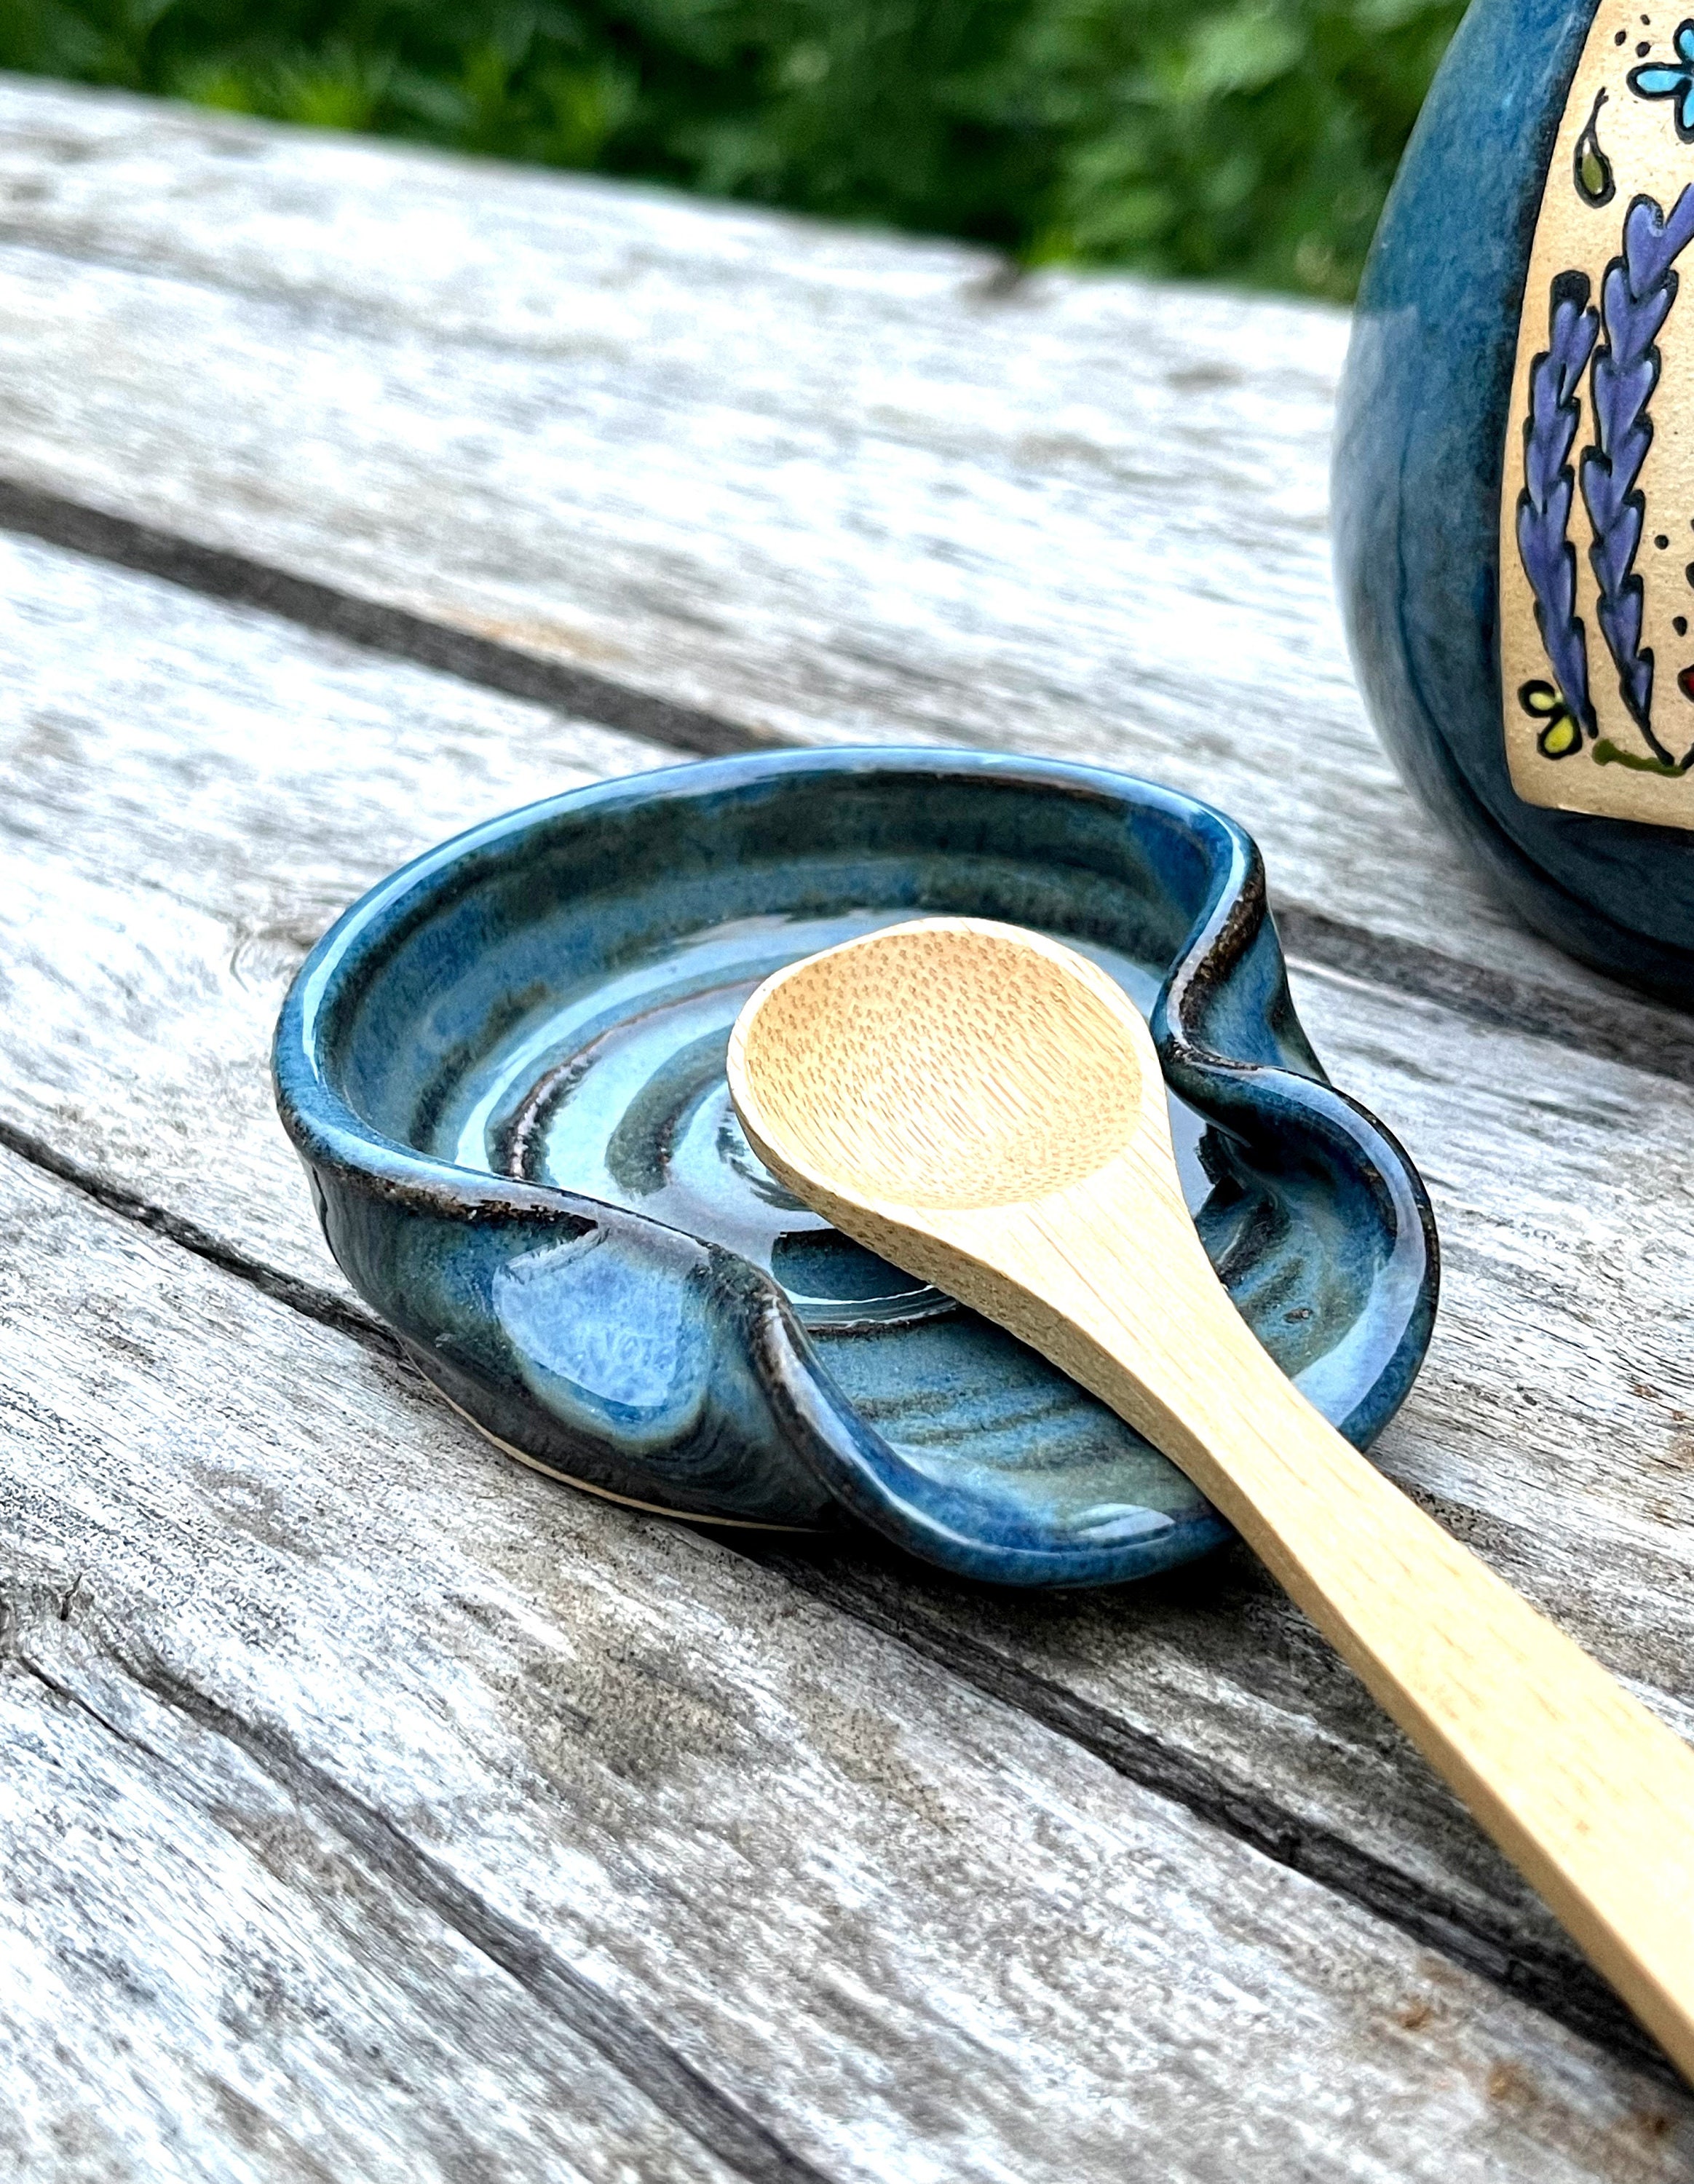 Cornucopia Brands Cornucopia Whale Spoon Rest; Blue and White Ceramic Novelty Spoon Holder for Kitchen Stove